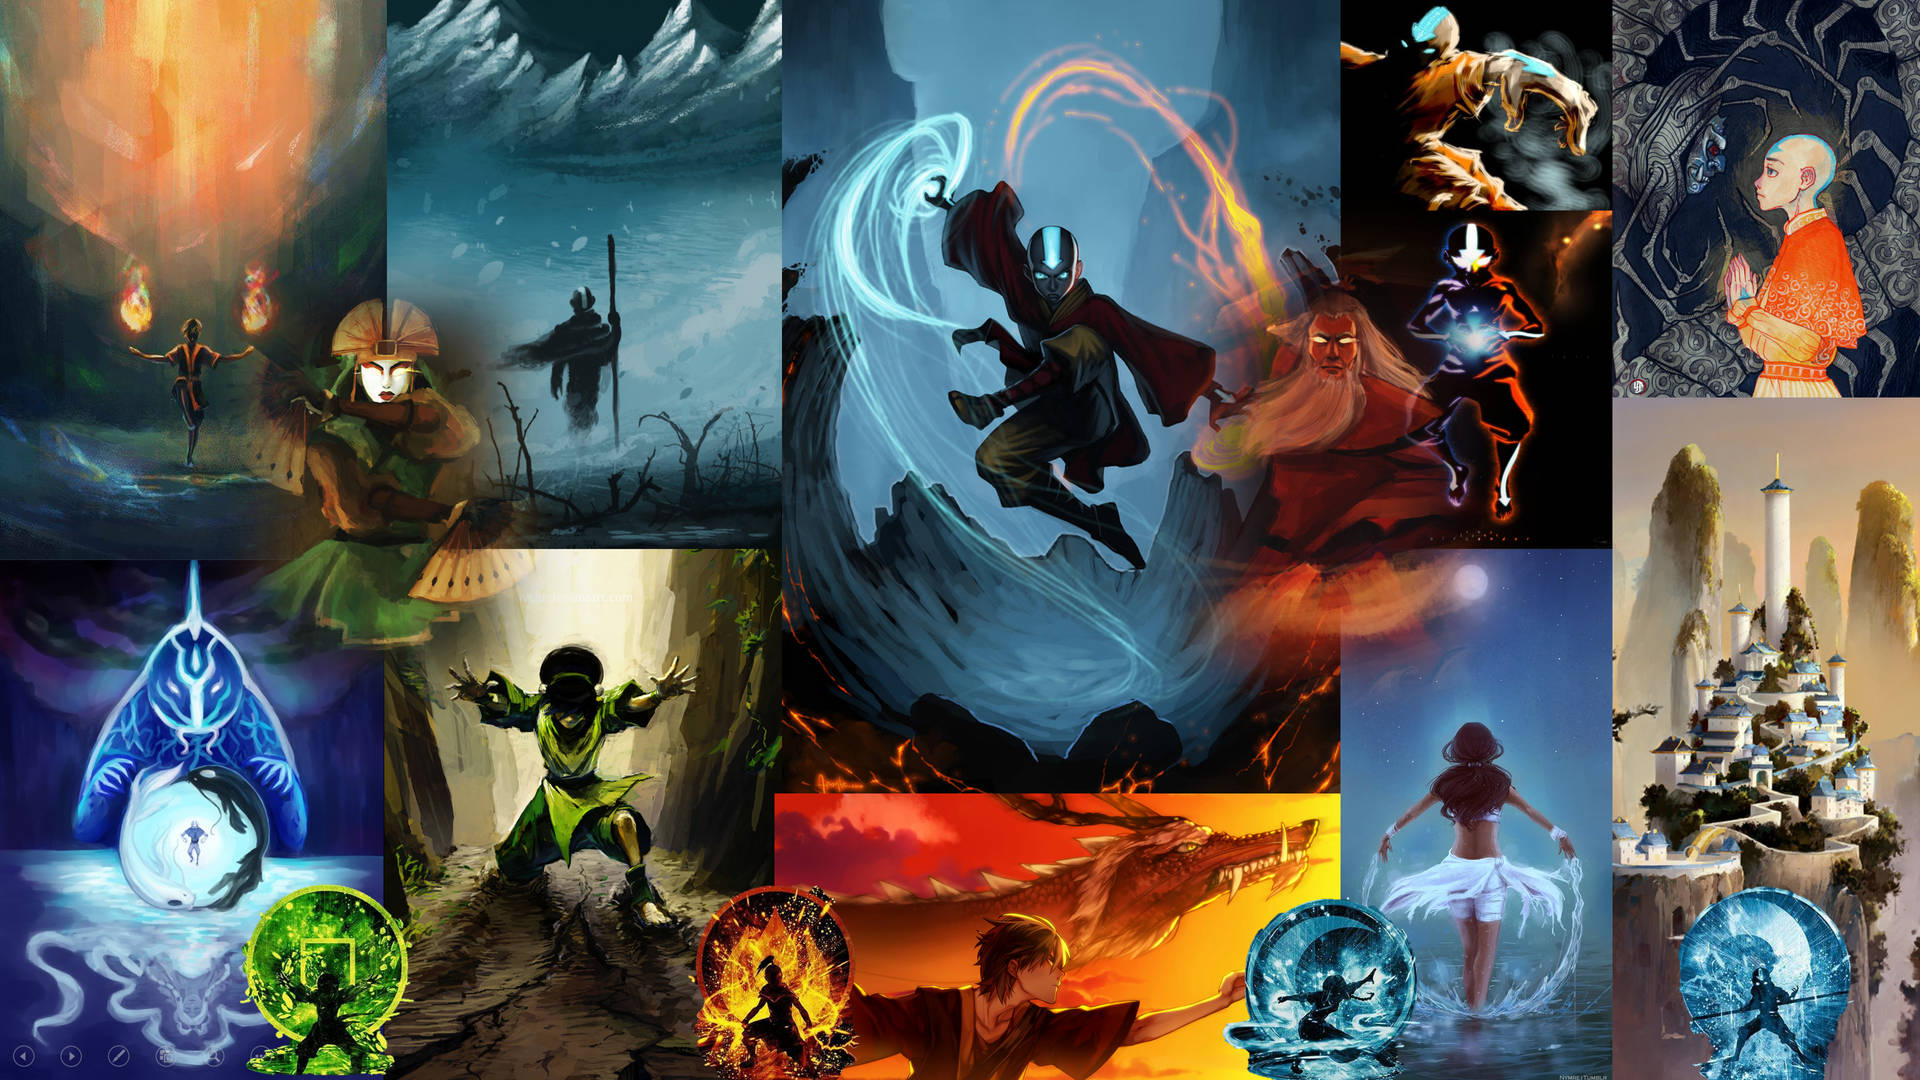 Firebending Masters Aang & Zuko Unleash Their Powers Wallpaper